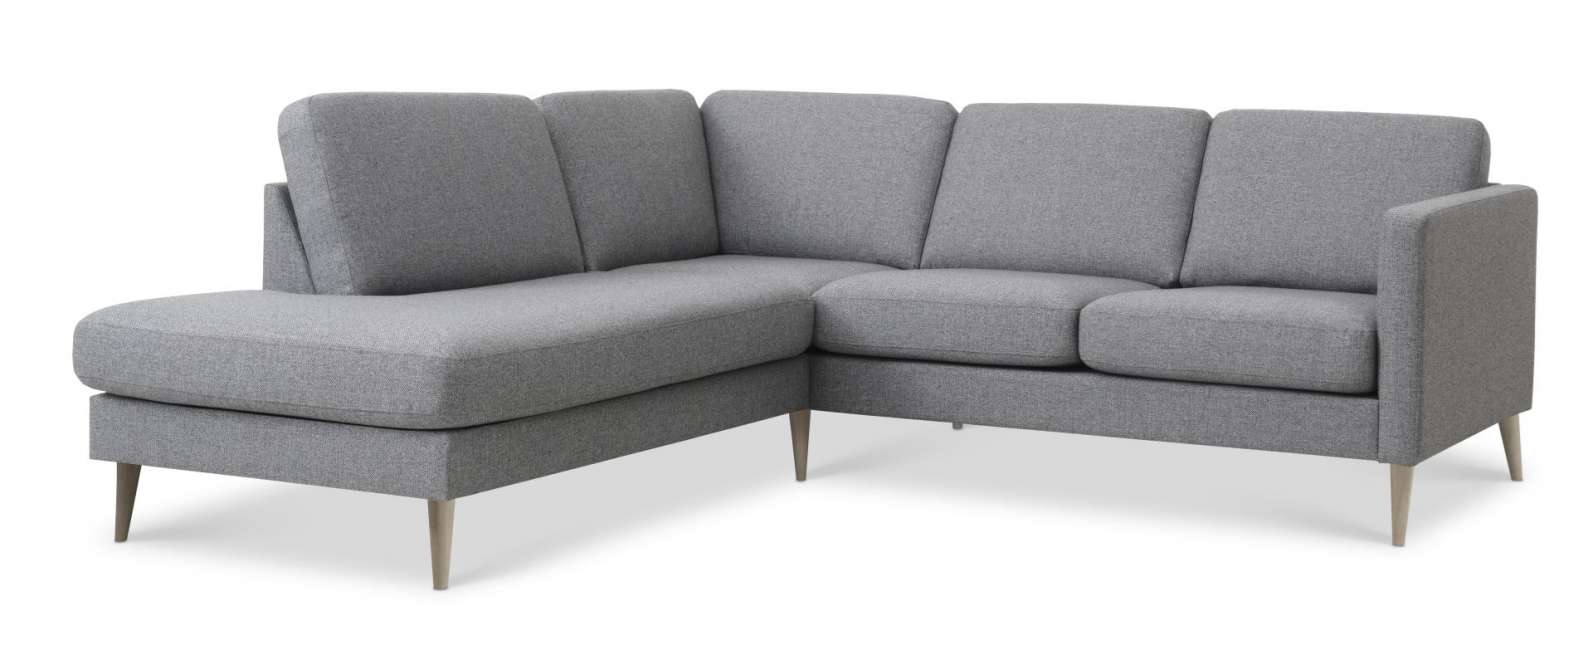 Priser på Ask sæt 52 lille OE sofa, m. venstre chaiselong - lys granitgrå polyester stof og natur træ